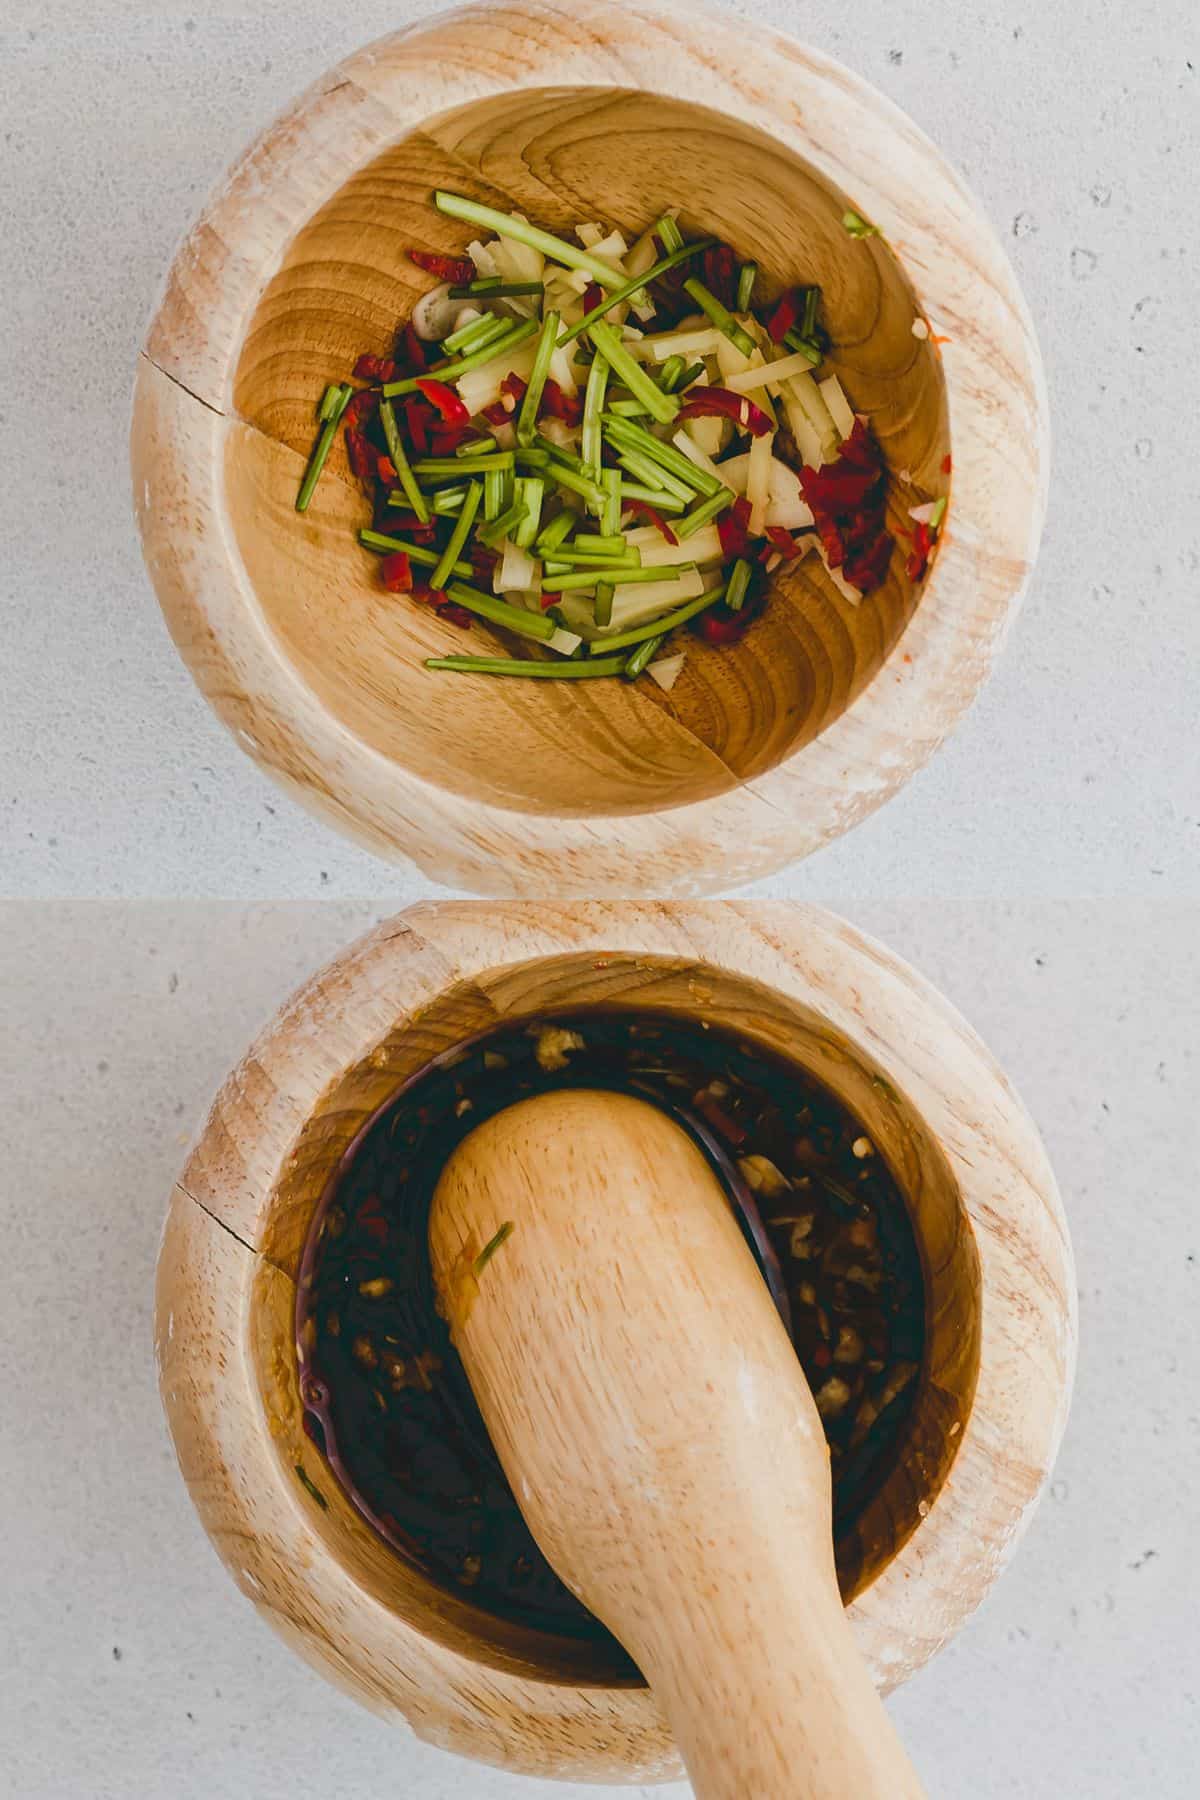 Thai Glass Noodle Salat Recipe Step 1-2